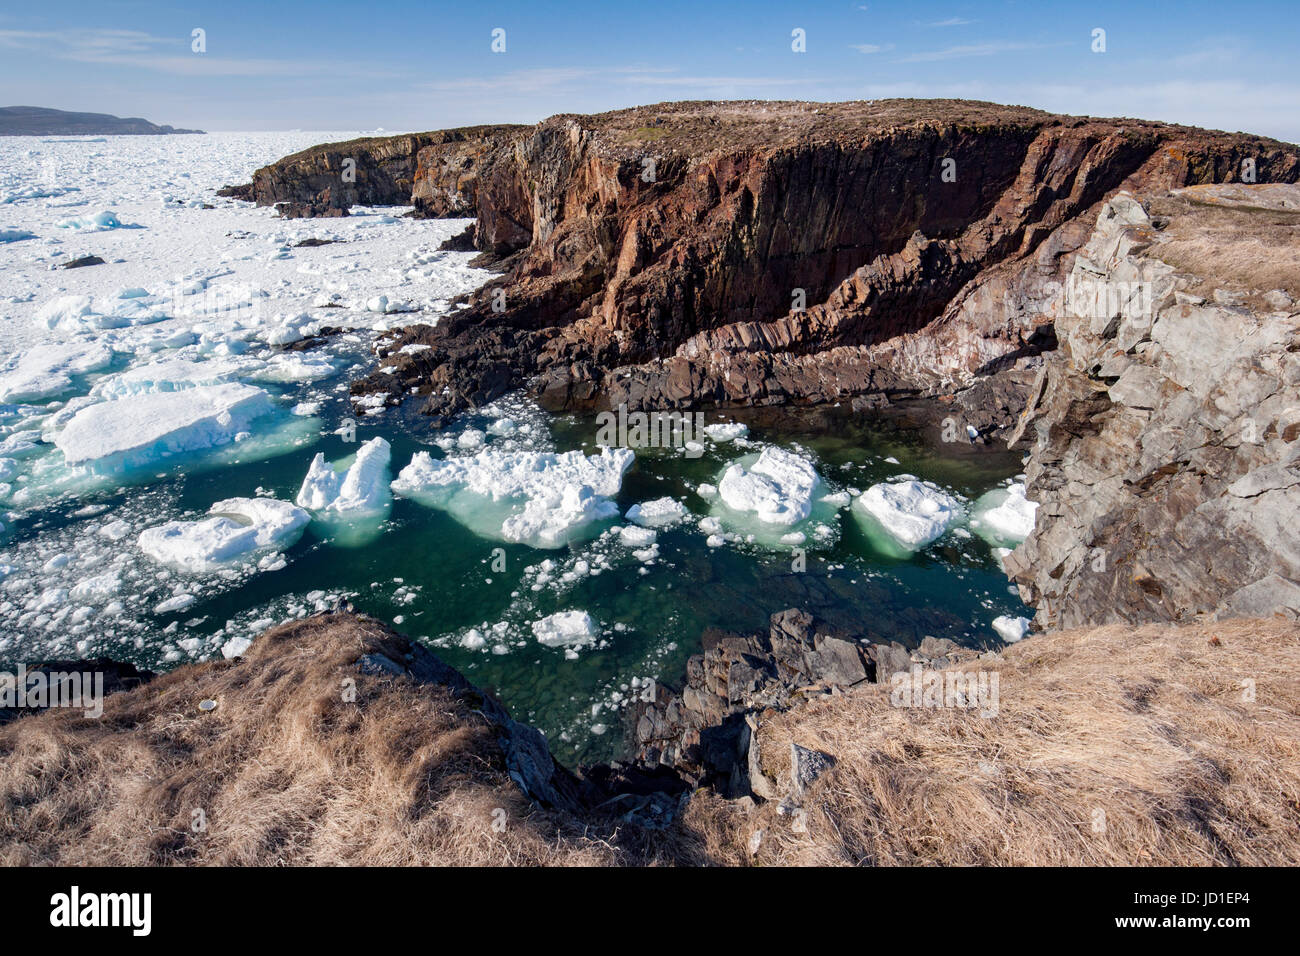 Sea ice and rocky headland in Elliston, near Bonavista, Newfoundland, Canada Stock Photo